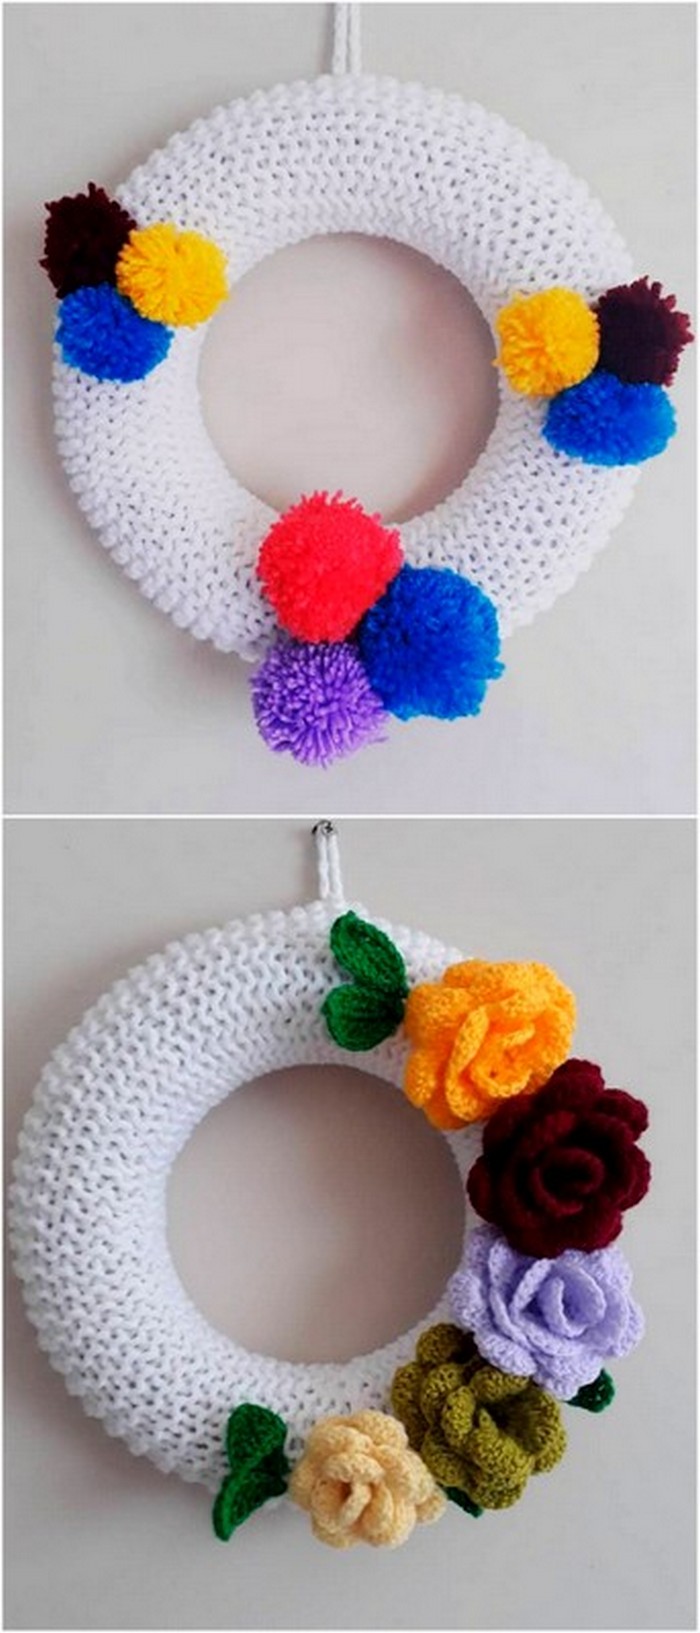 Latest crochet pattern for decorating idea